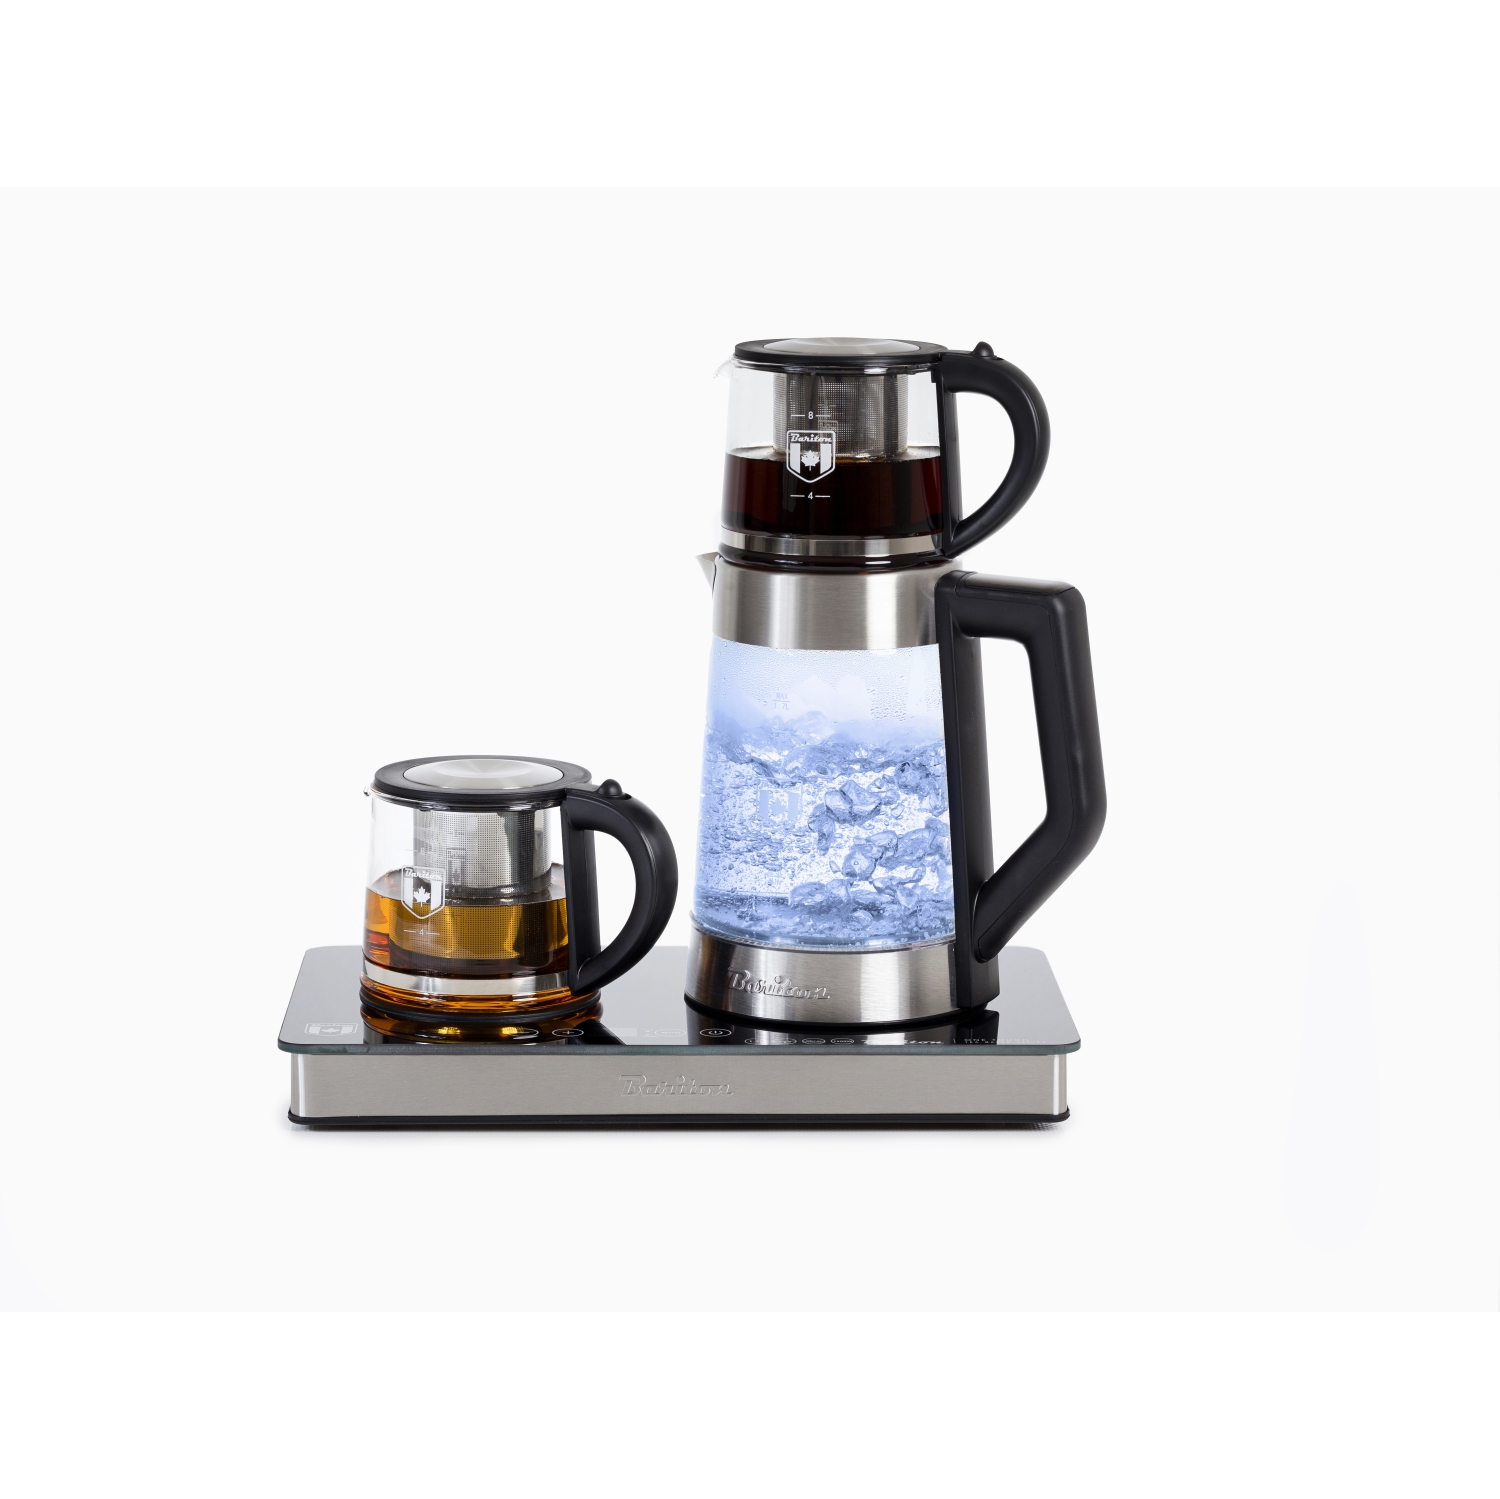 Electric tea & coffee maker model BTM-1795GS